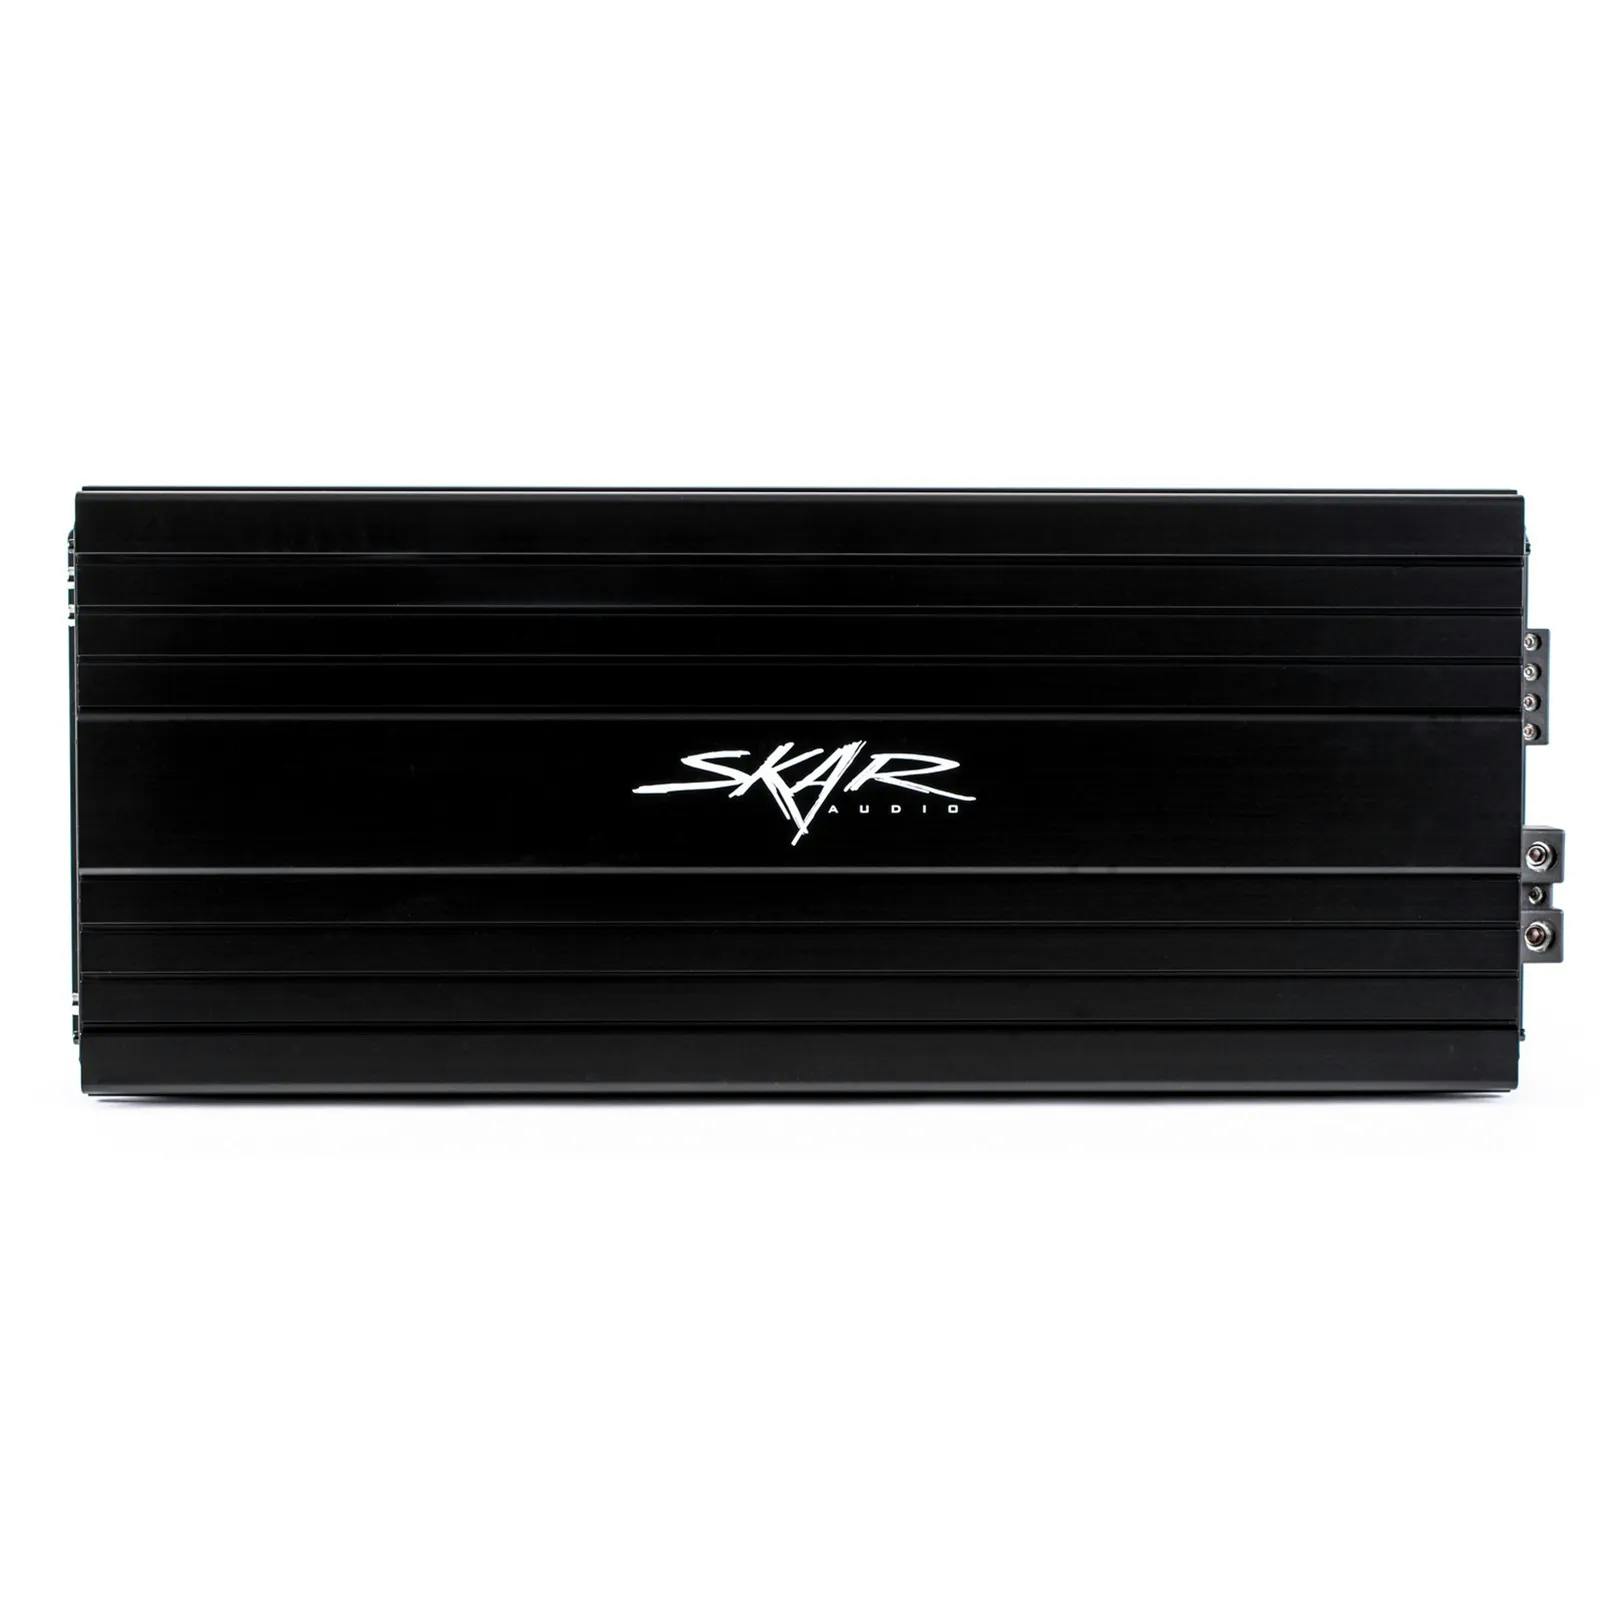 Featured Product Photo for SKv2-3500.1D | 3,500 Watt Monoblock Car Amplifier